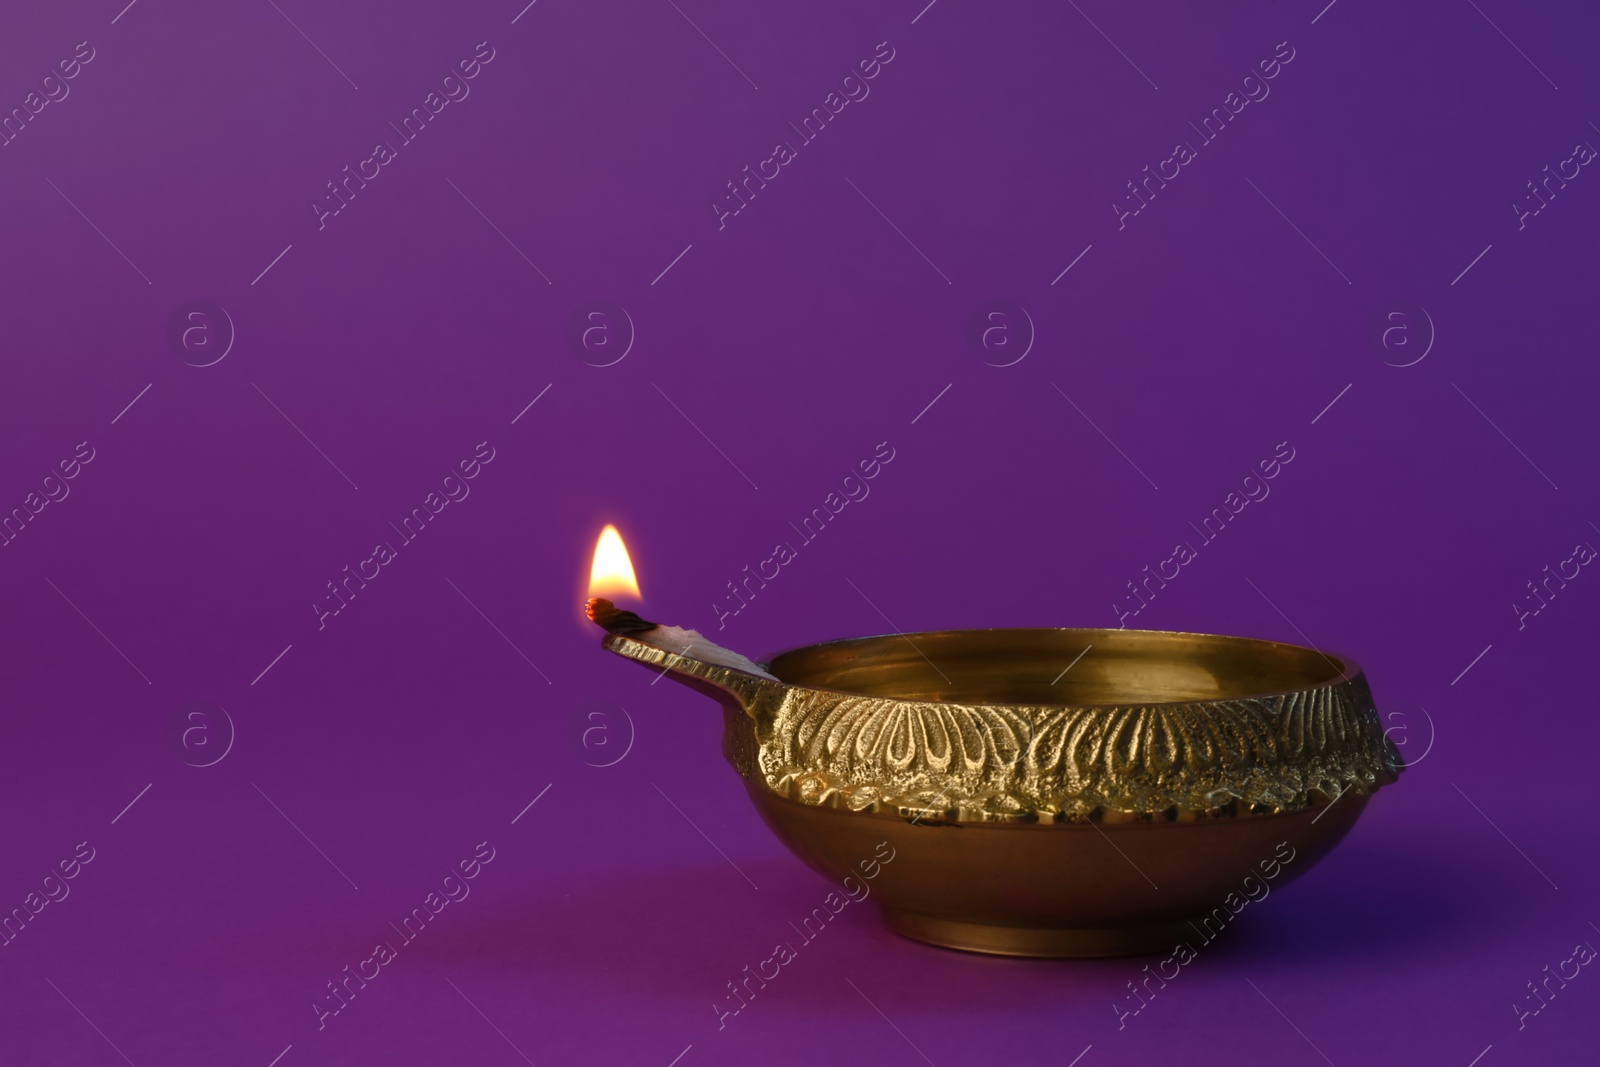 Photo of Lit diya lamp on purple background, space for text. Diwali celebration